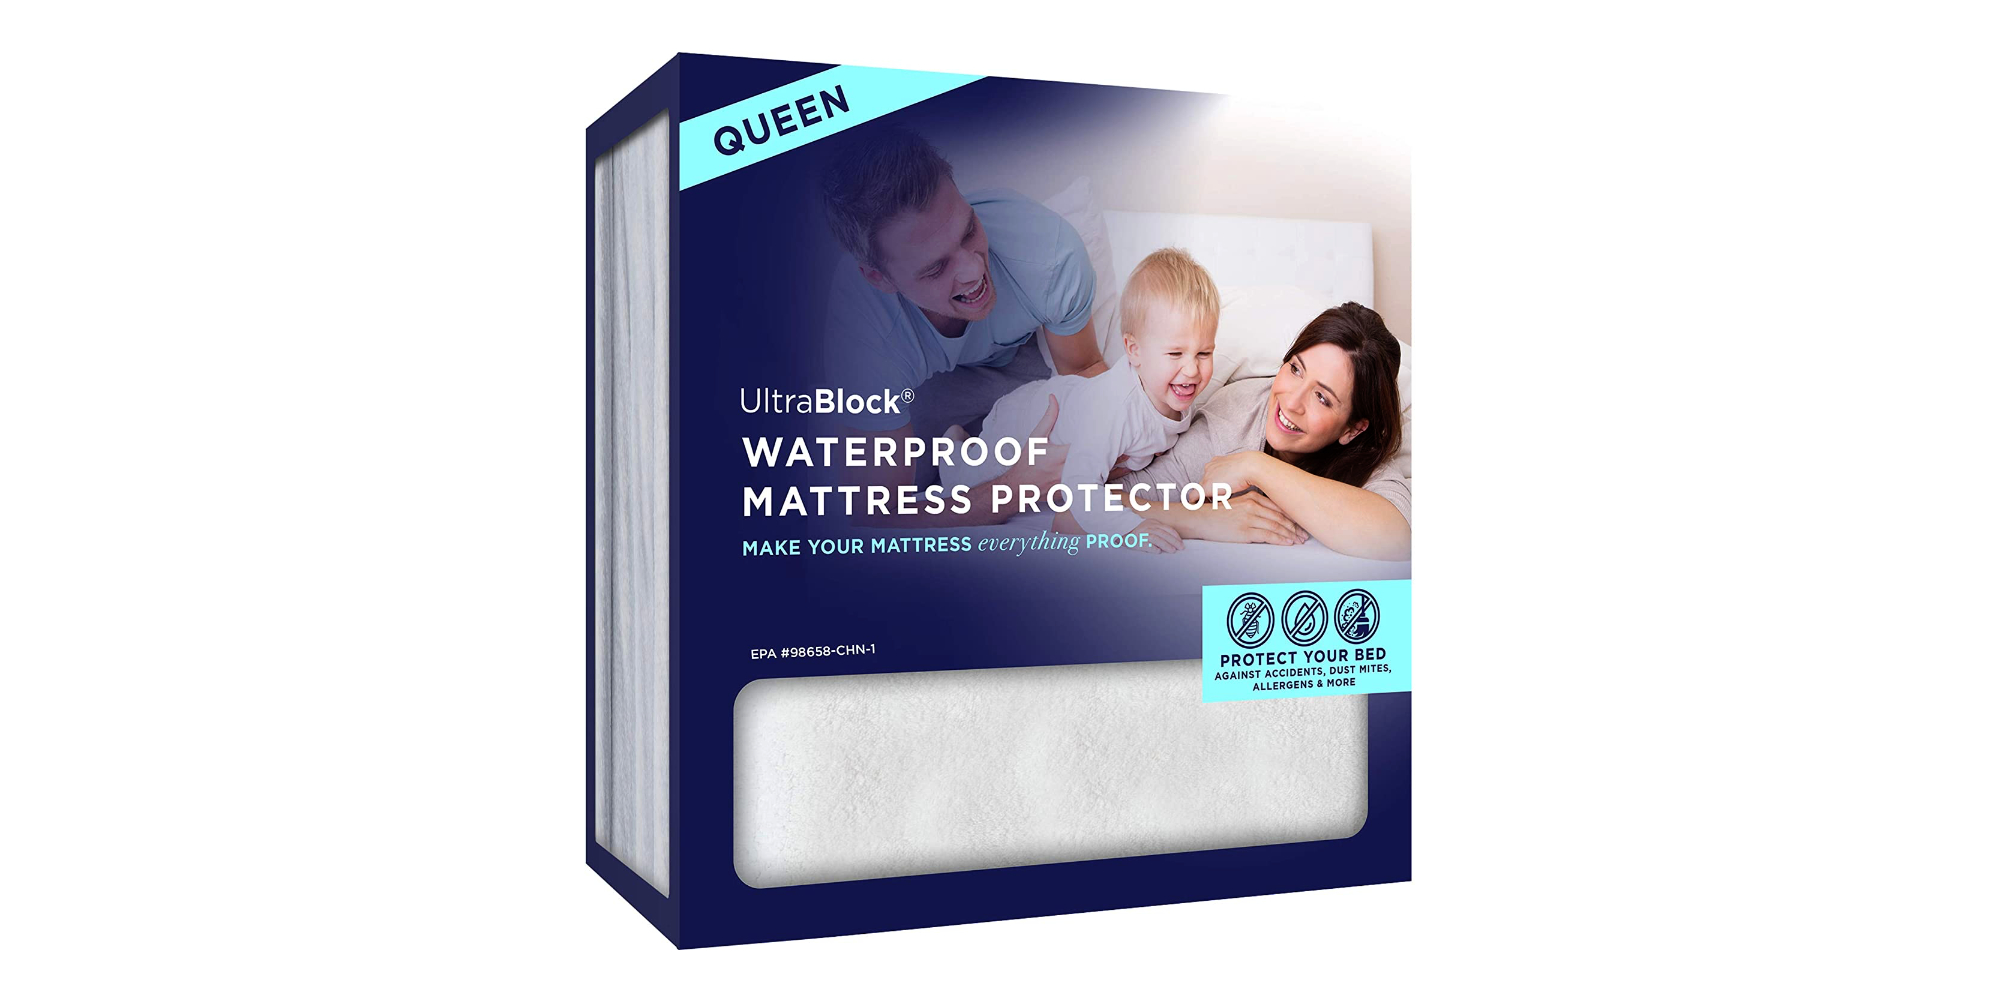 is the a waterproof queen mattress protector